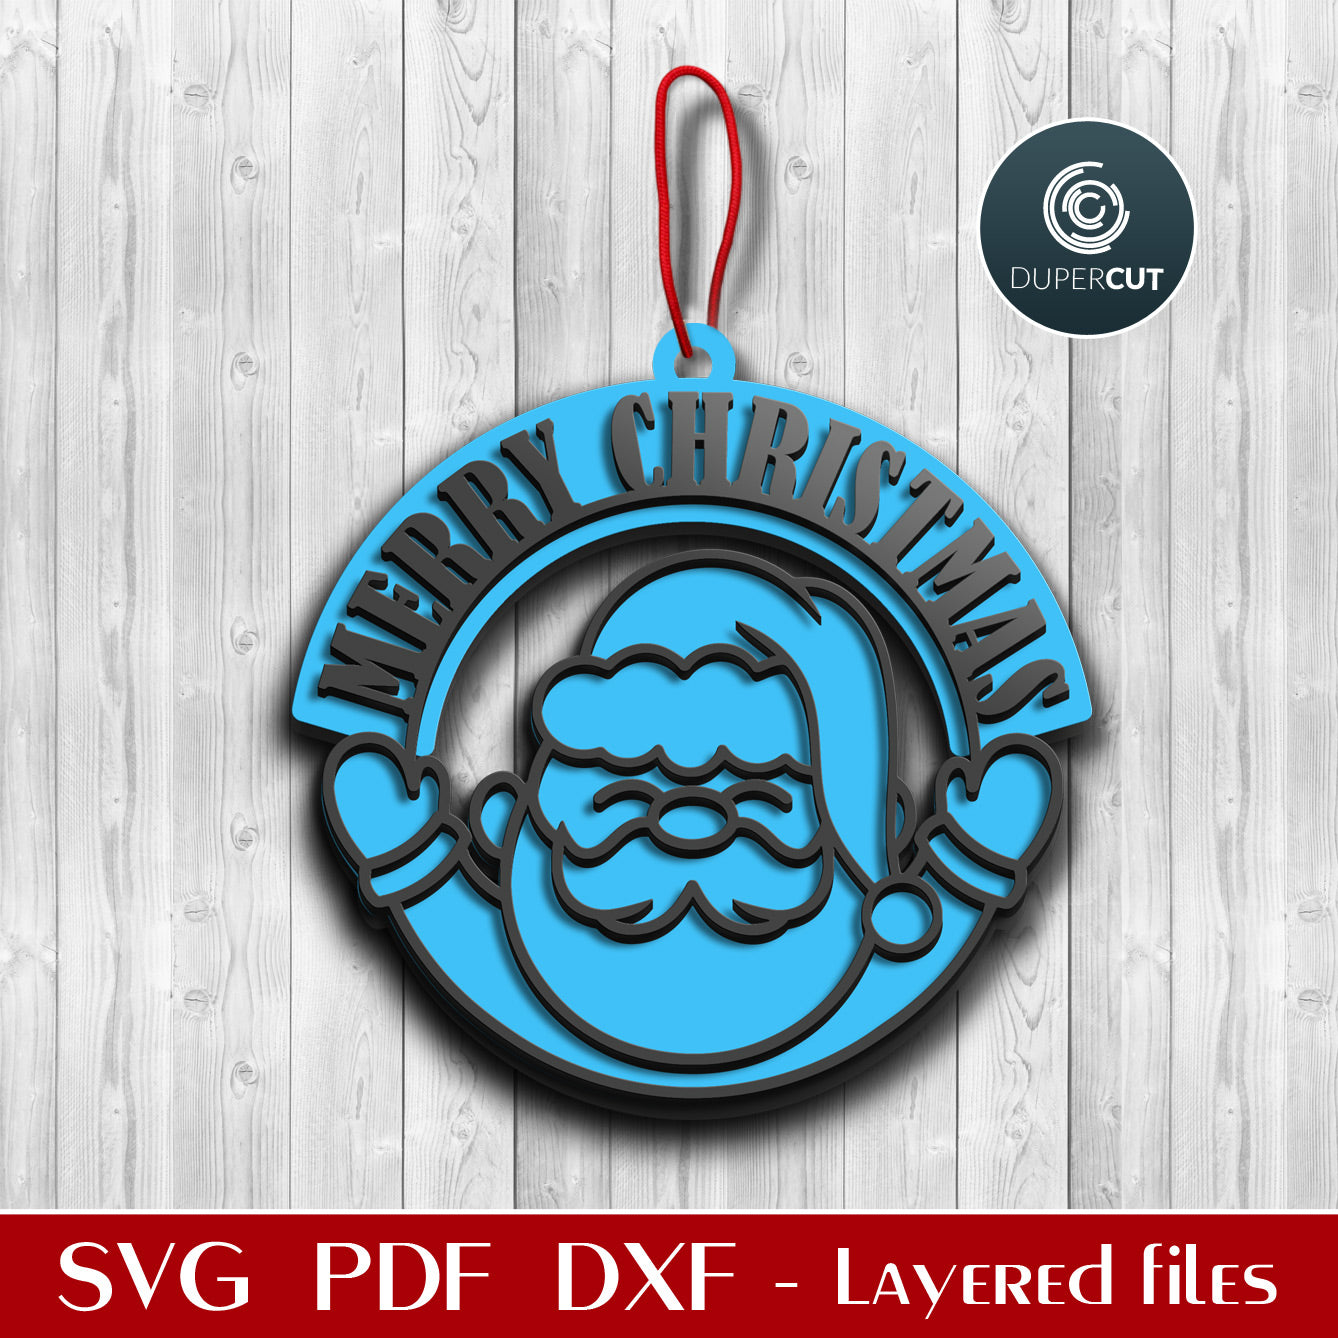 Christmas door diy hangers bundle santa - on sale 60% savings - SVG DXF layered laser cutting files for Glowforge, Cricut, Silhouette, scroll saw, CNC plasma machines by DuperCut 